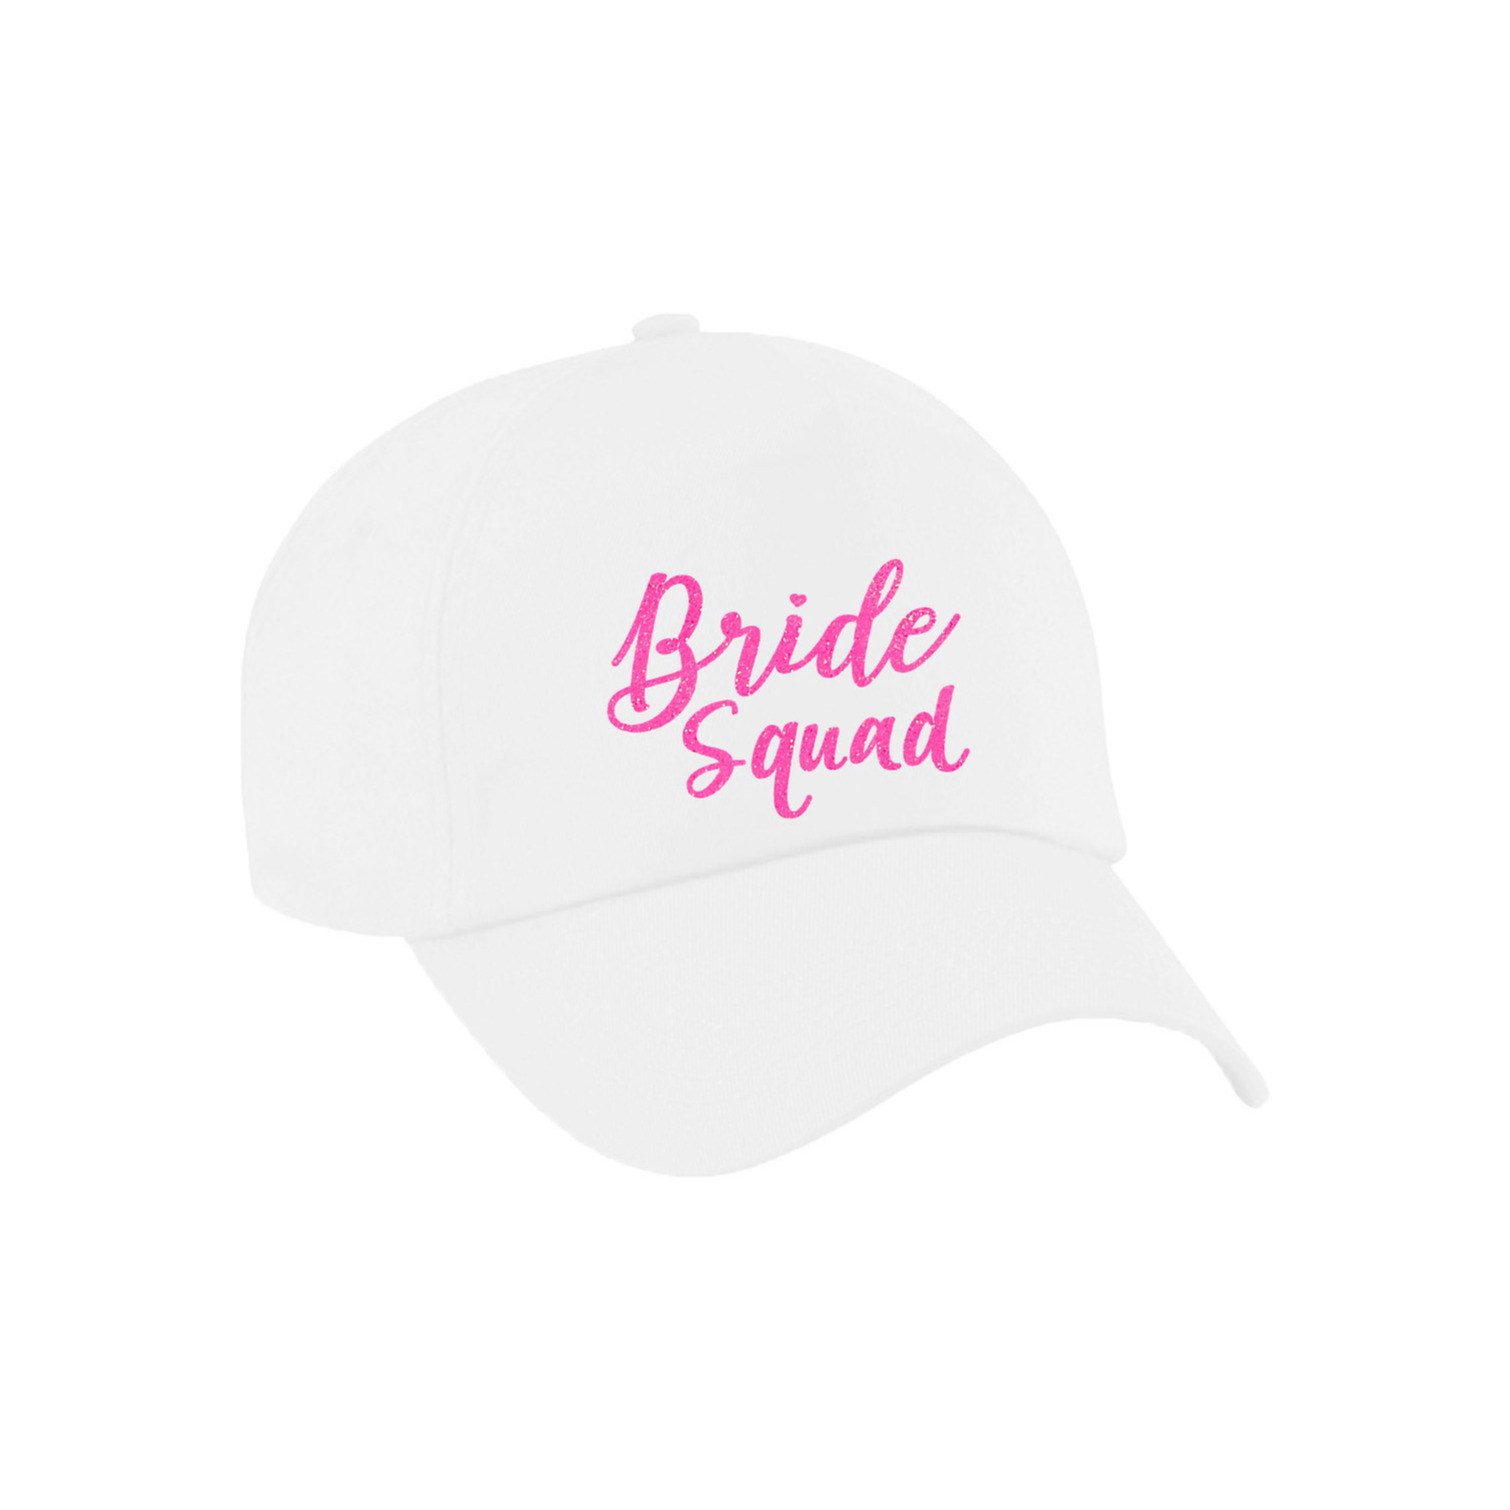 Vrijgezellenfeest pet voor dames Bride Squad wit roze glitters bruiloft-trouwen